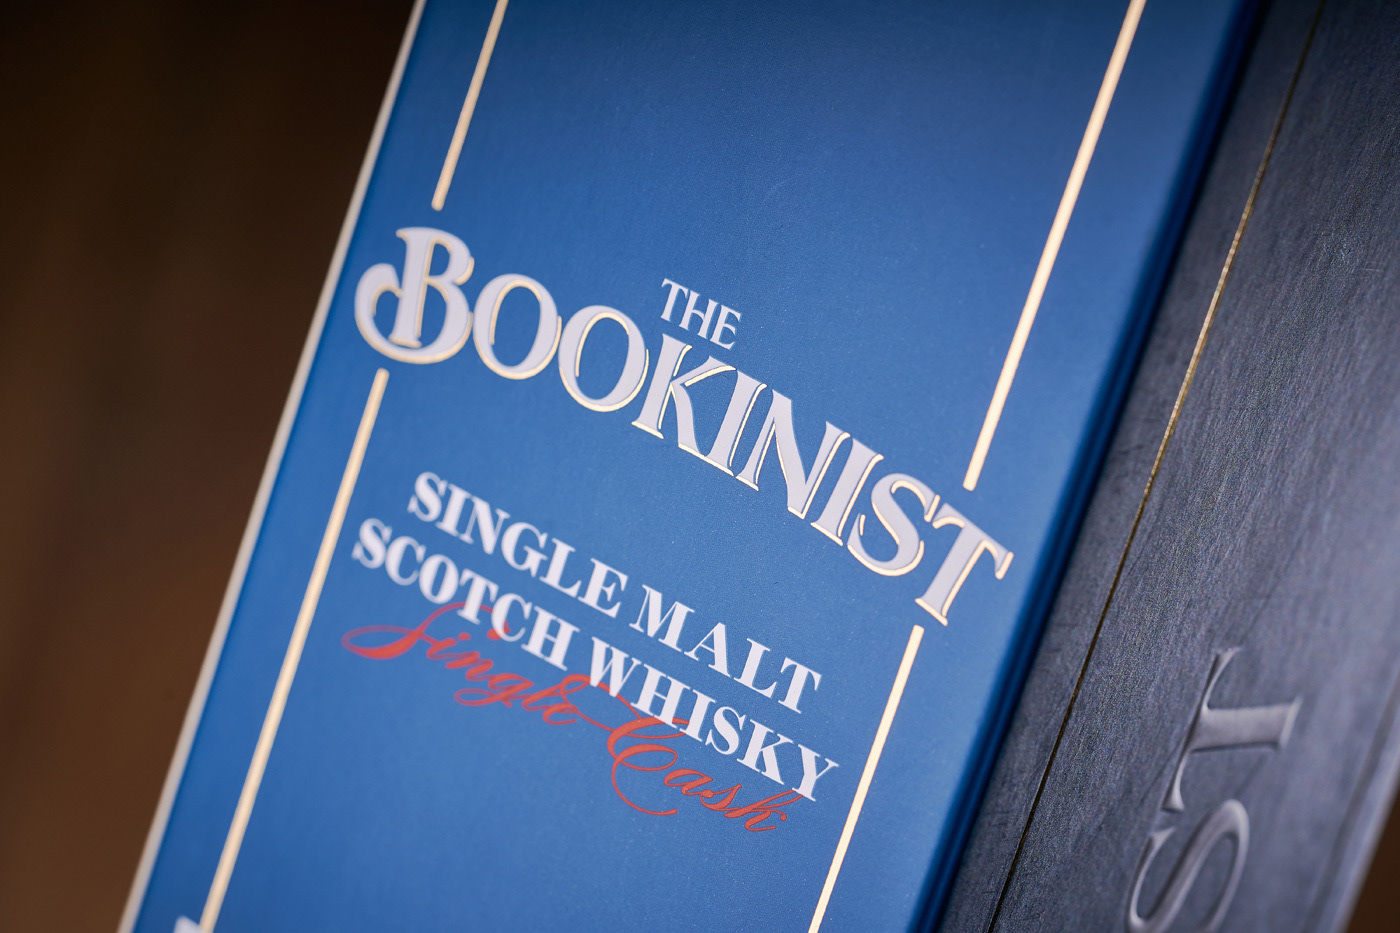 43oz books Collection design studio label design Private label scotch the bookinist vintage Whisky